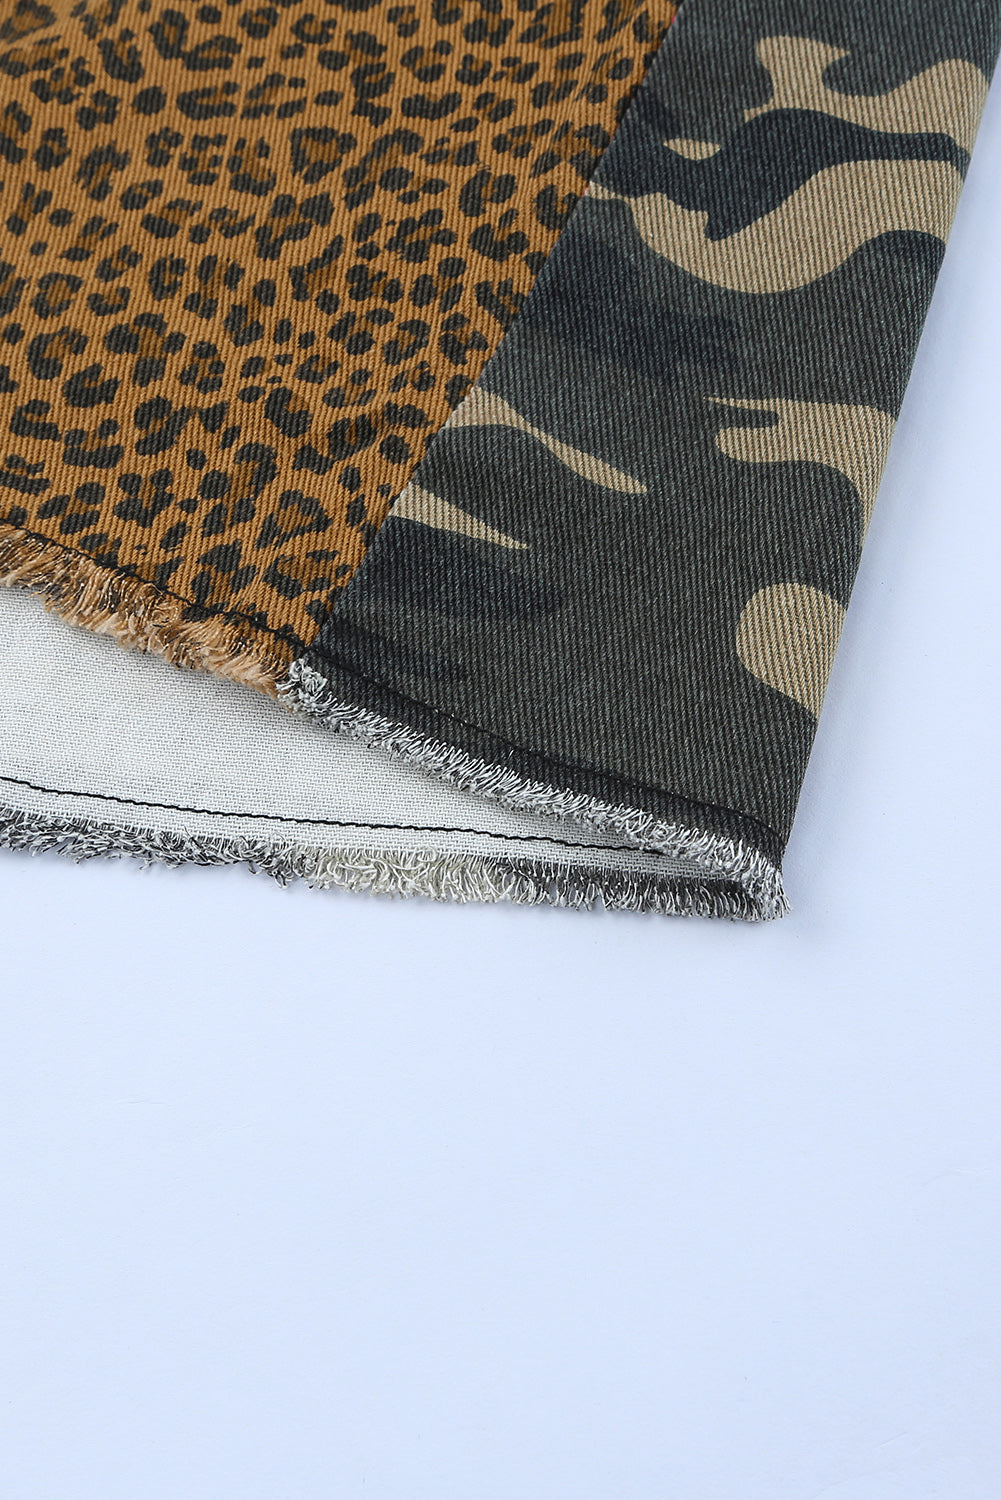 Leopard Camouflage Patchwork Jacket